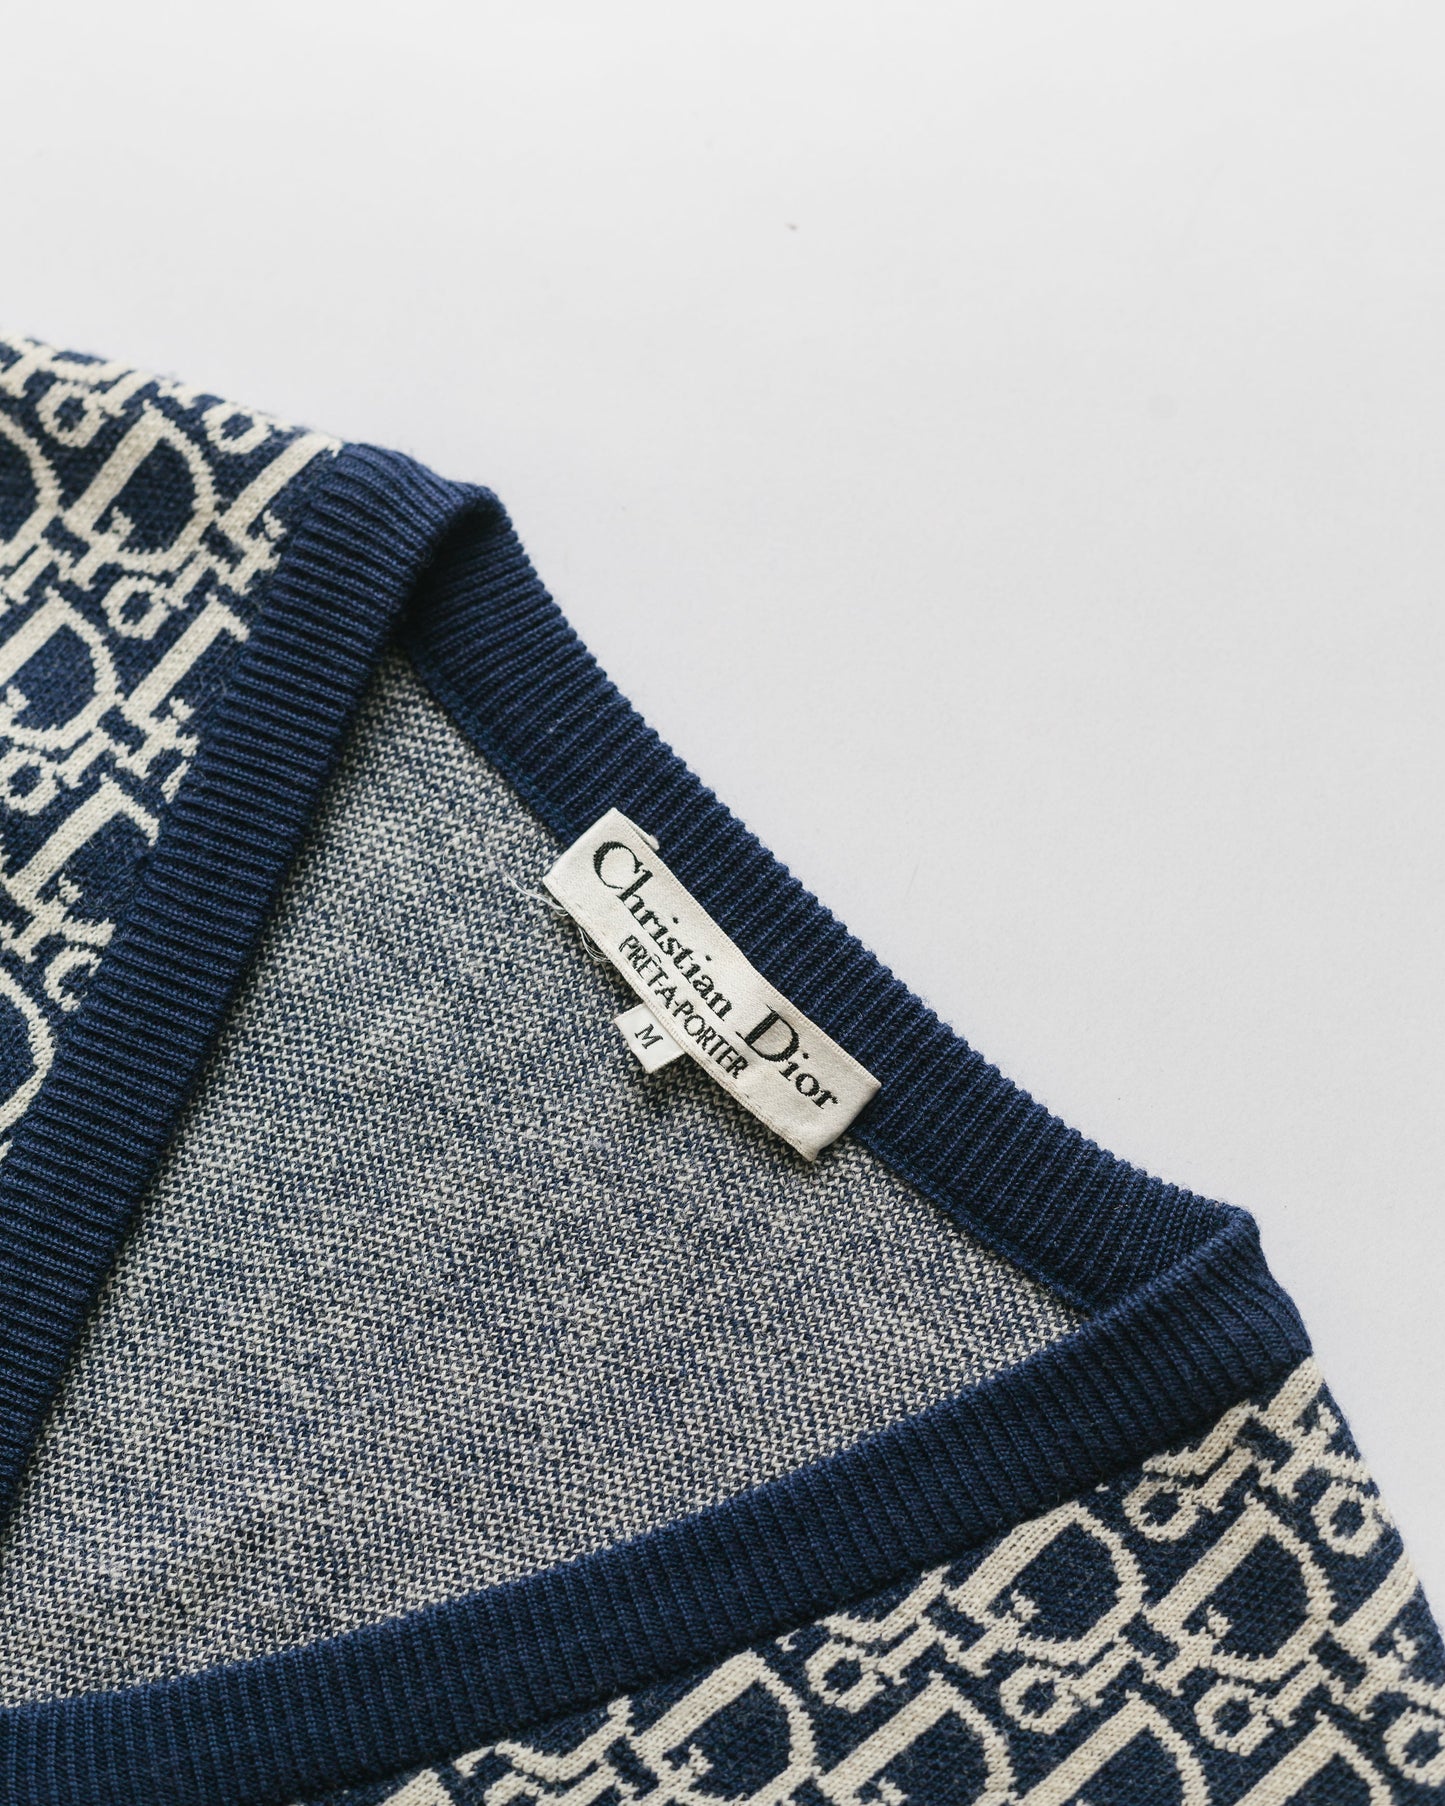 Vintage 1990s - 2000s oblique intarsia knit top